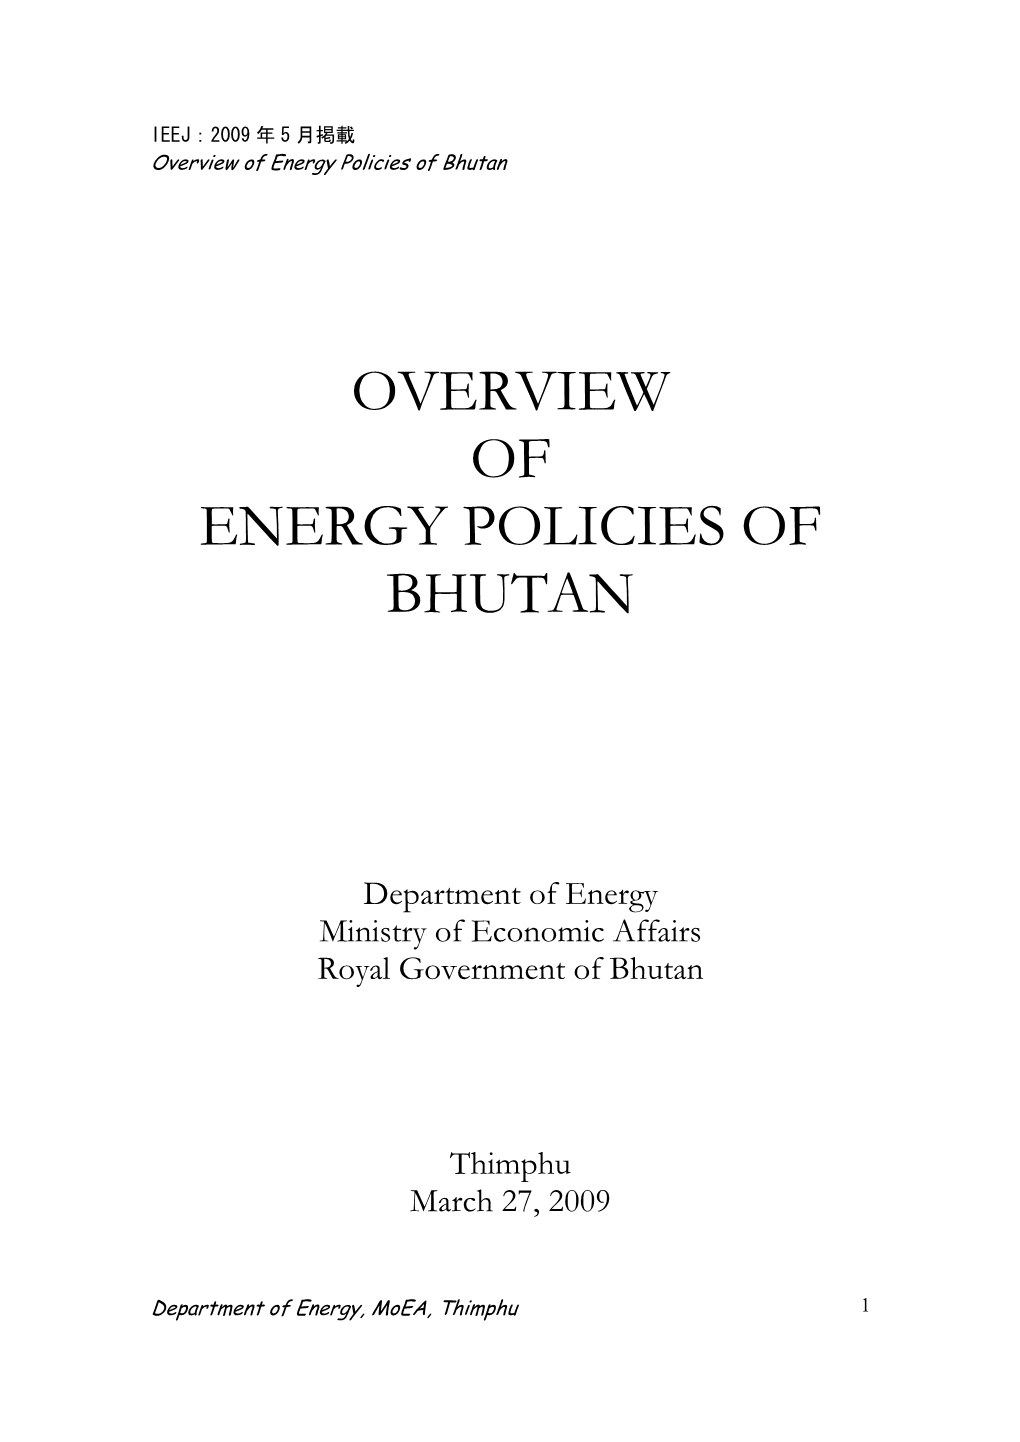 Overview of Energy Policies of Bhutan